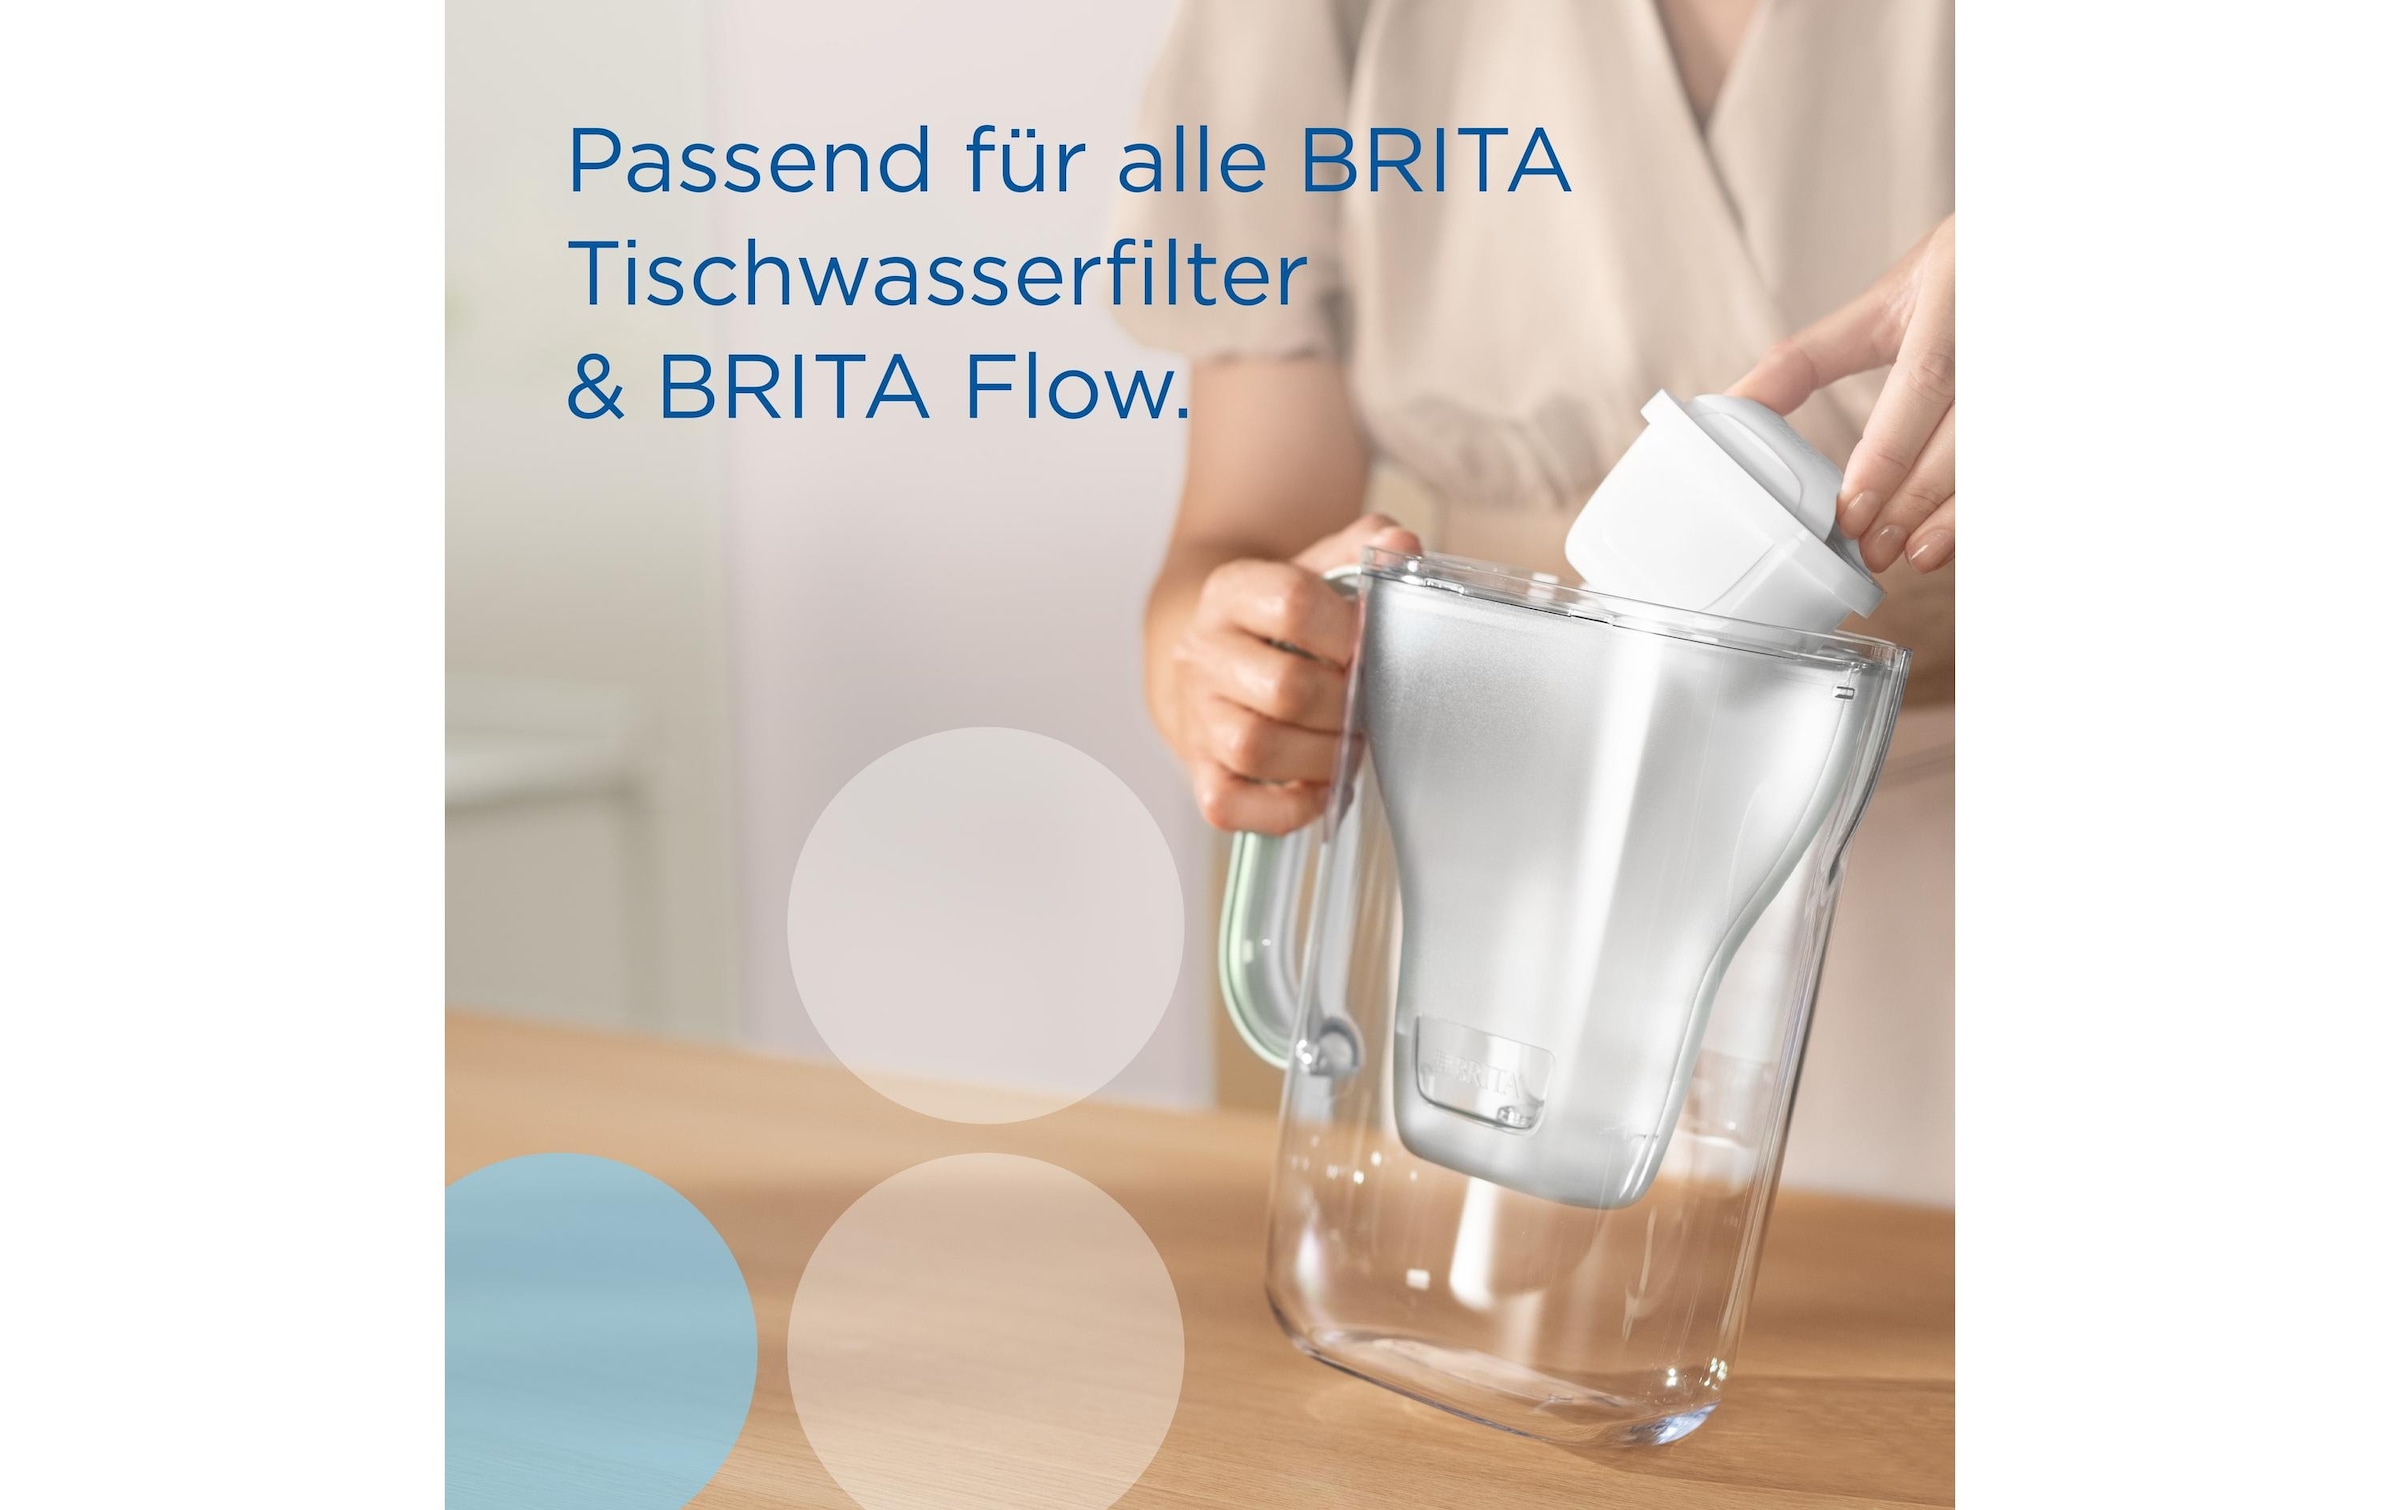 BRITA Wasserfilter »Maxtra Pro All-In-1 12er Pack«, (12 tlg.)